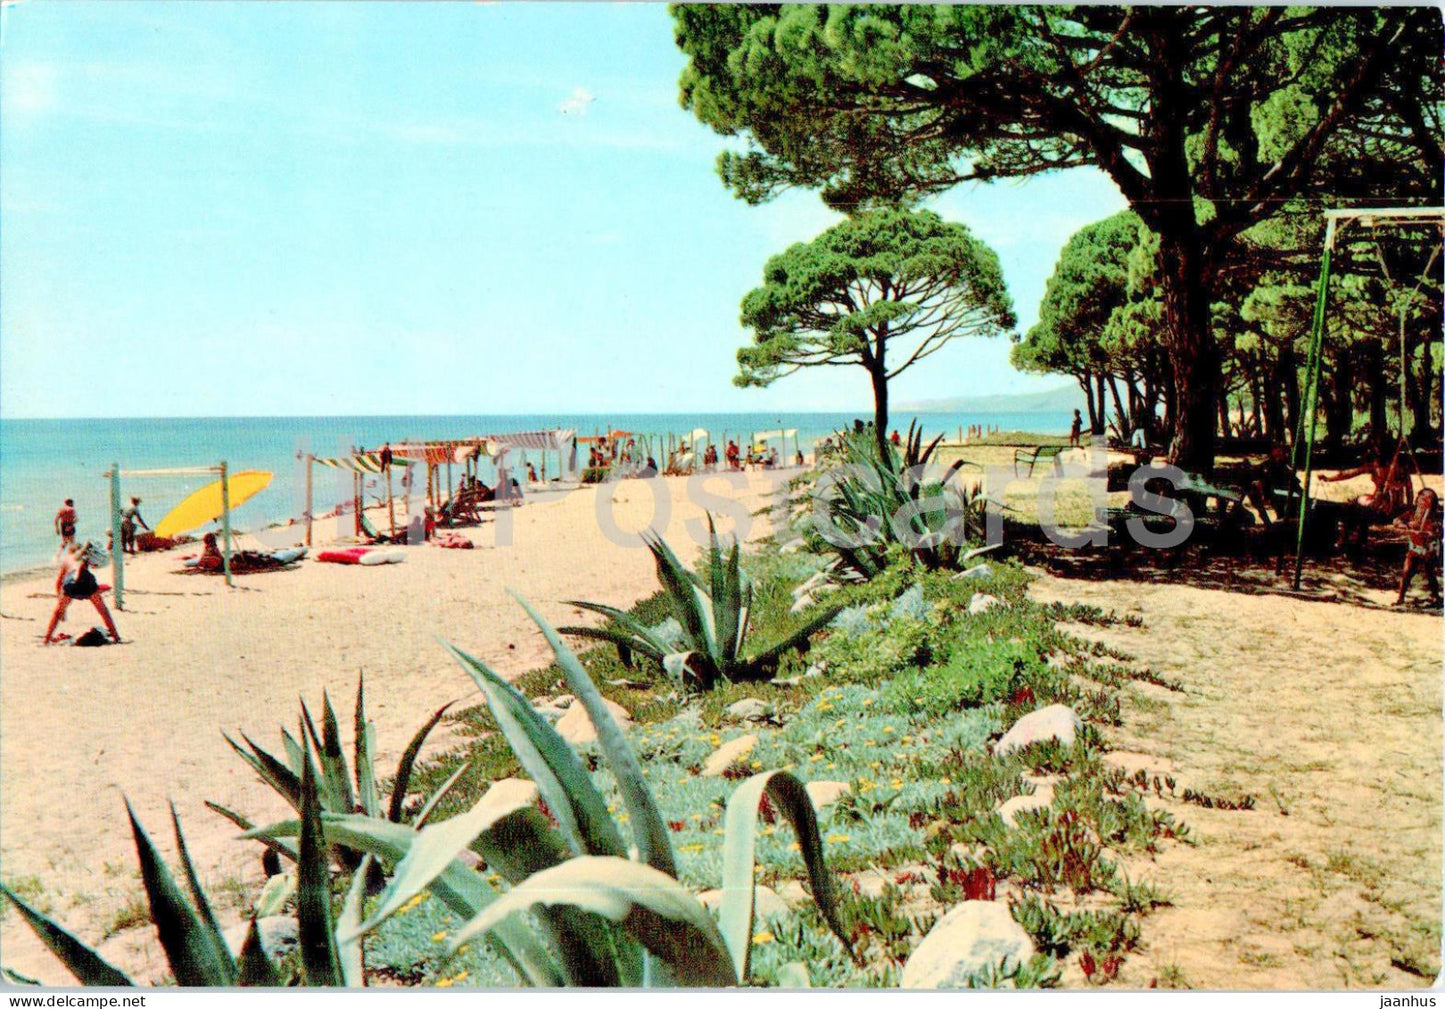 Costa Dorada - Tarragona - Cambrils - Vilafortuny beach - Spain - unused - JH Postcards